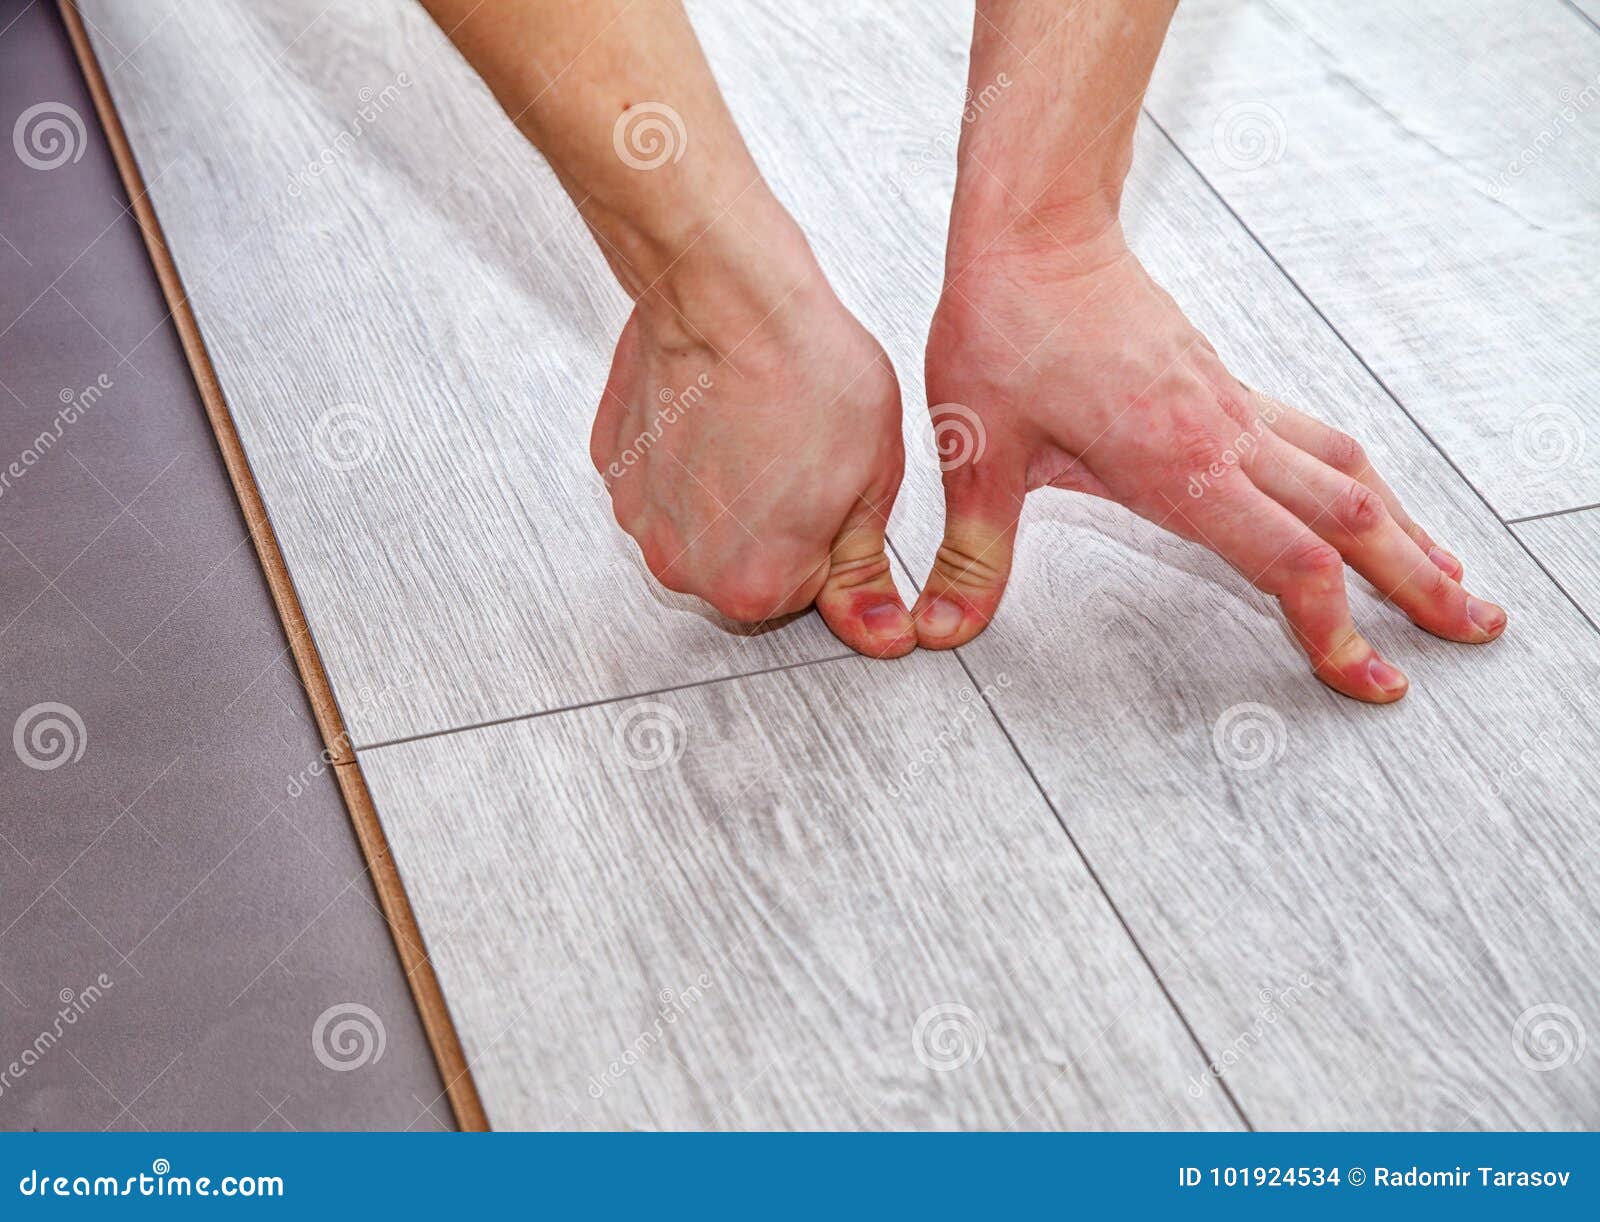 Handyman Laying Down Laminate Flooring Boards Stock Photo Image